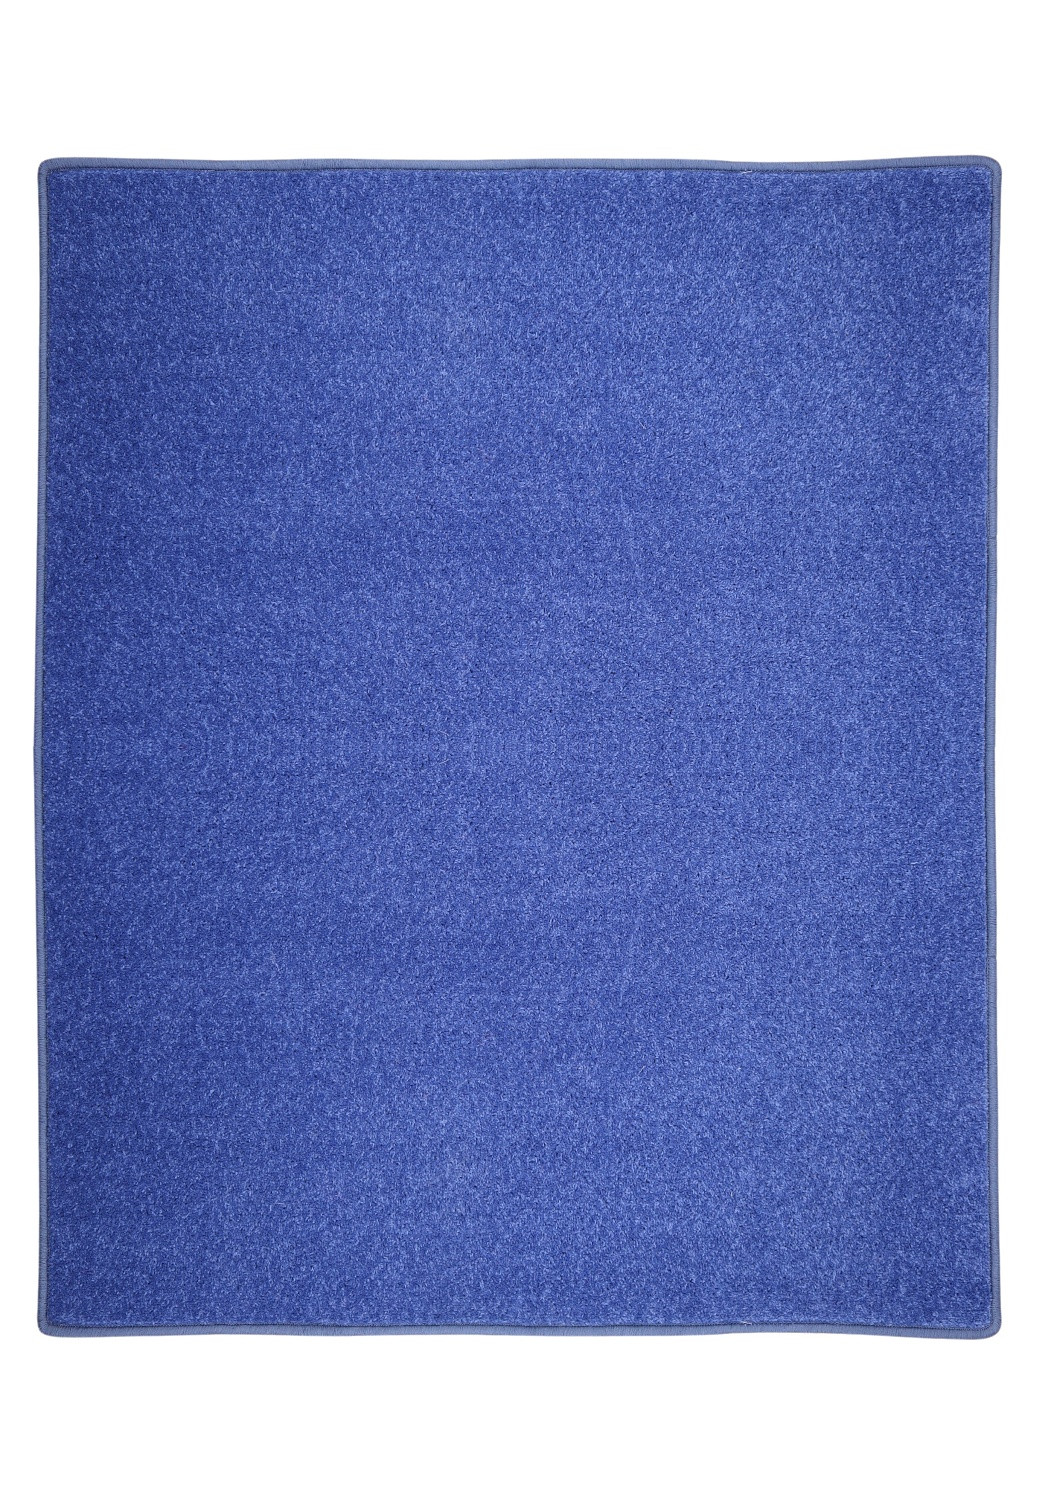 Kusový koberec Eton modrý 82 - 120x160 cm Vopi koberce 